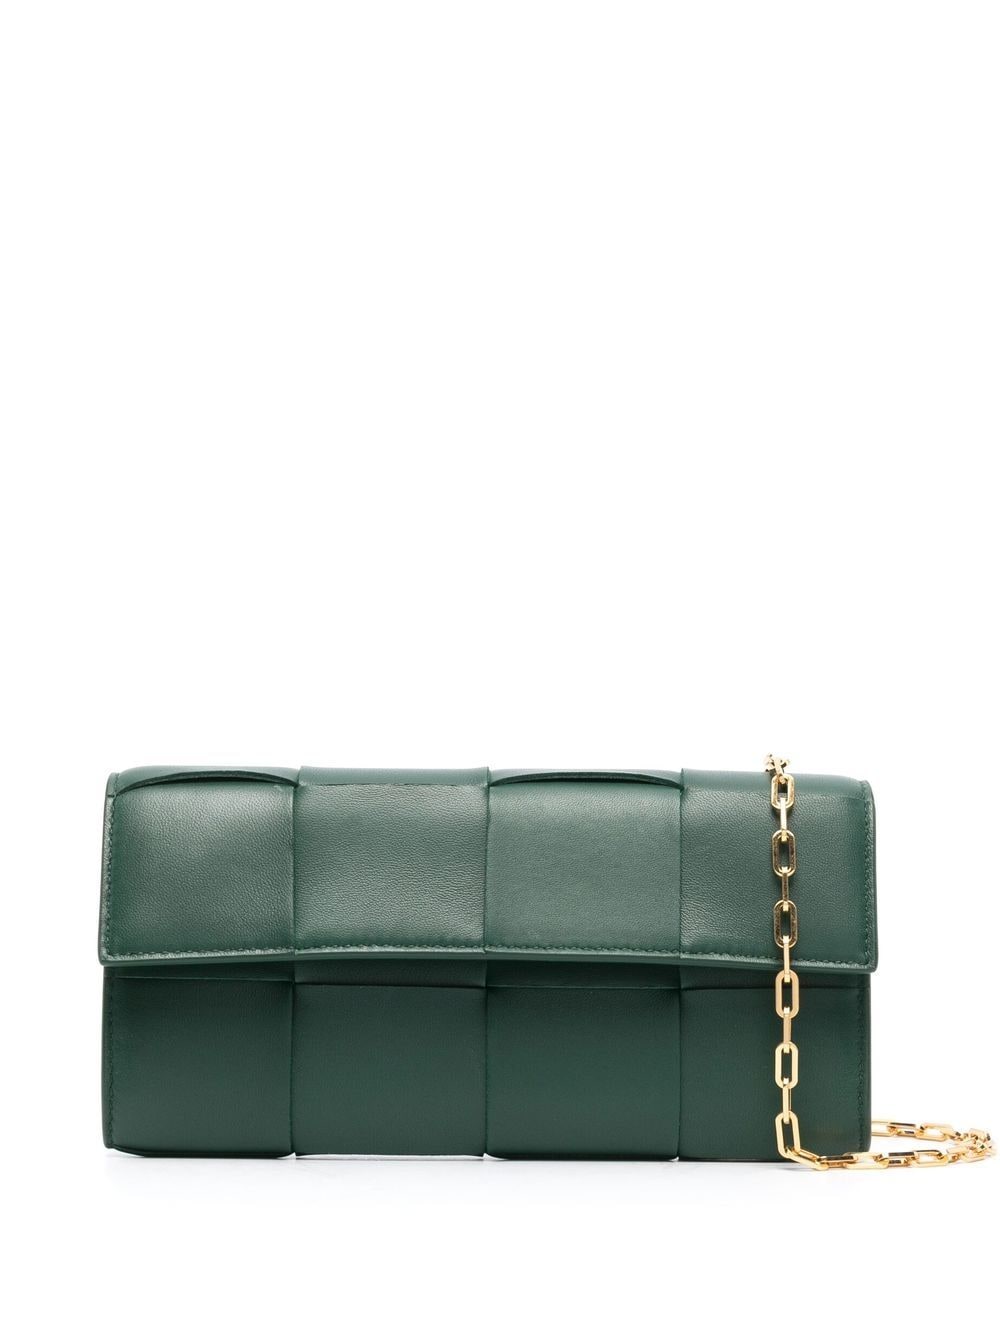 Bottega Veneta Cassette Leather Clutch Bag In Green